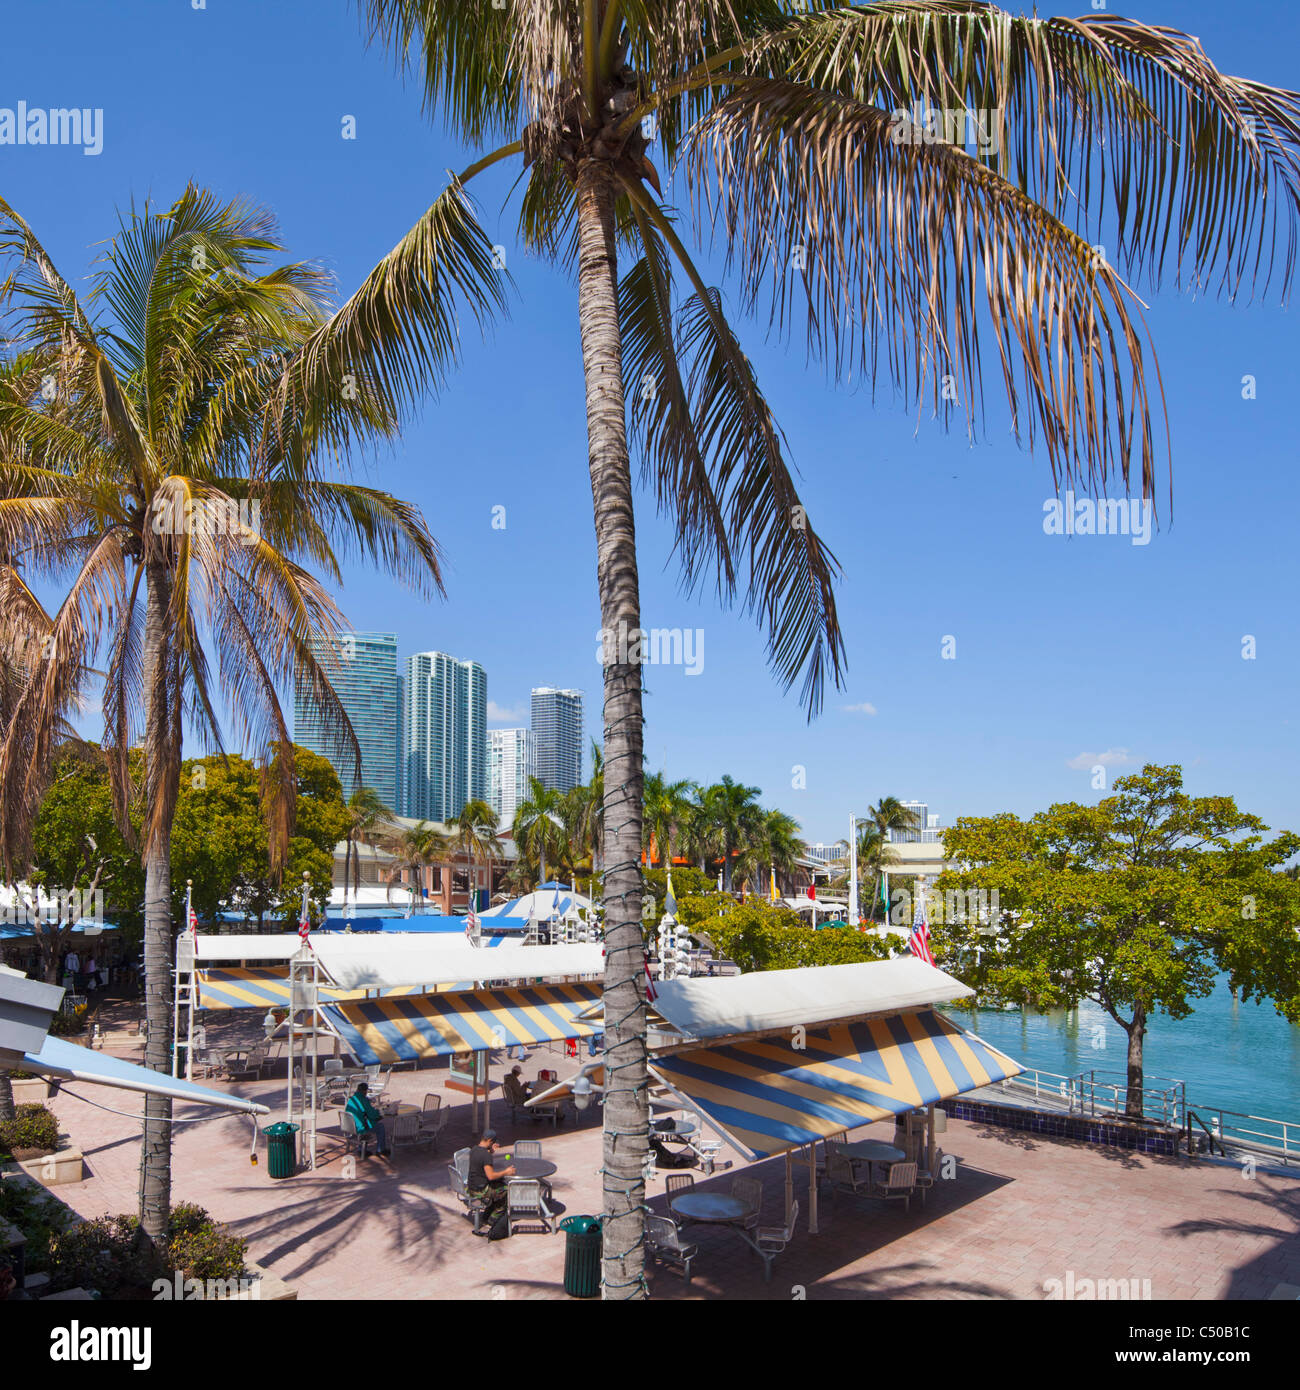 Bayside Marketplace Downtown Miami Foto Stock